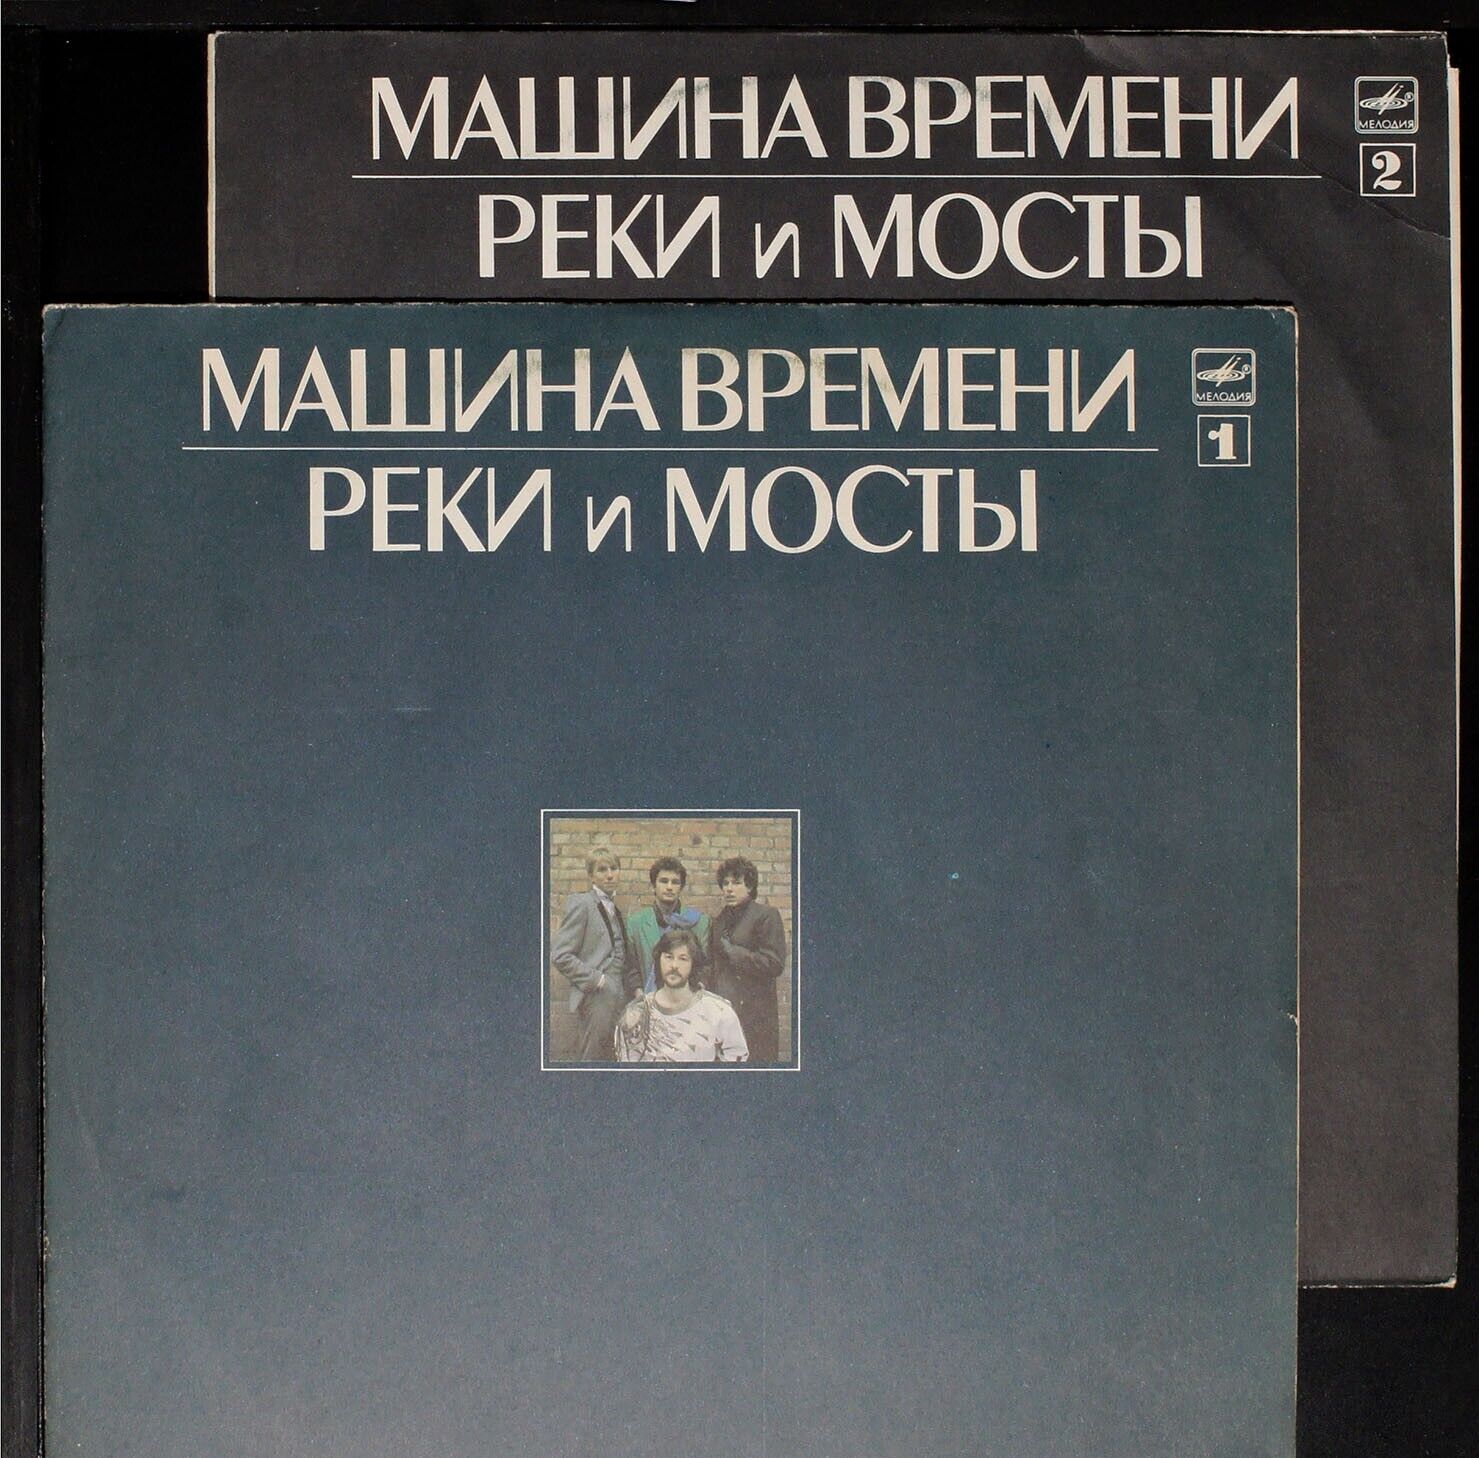 Mashina Vremeni - Машина Времени - Реки и Мосты 2xLP set USSR Melodiya US seller